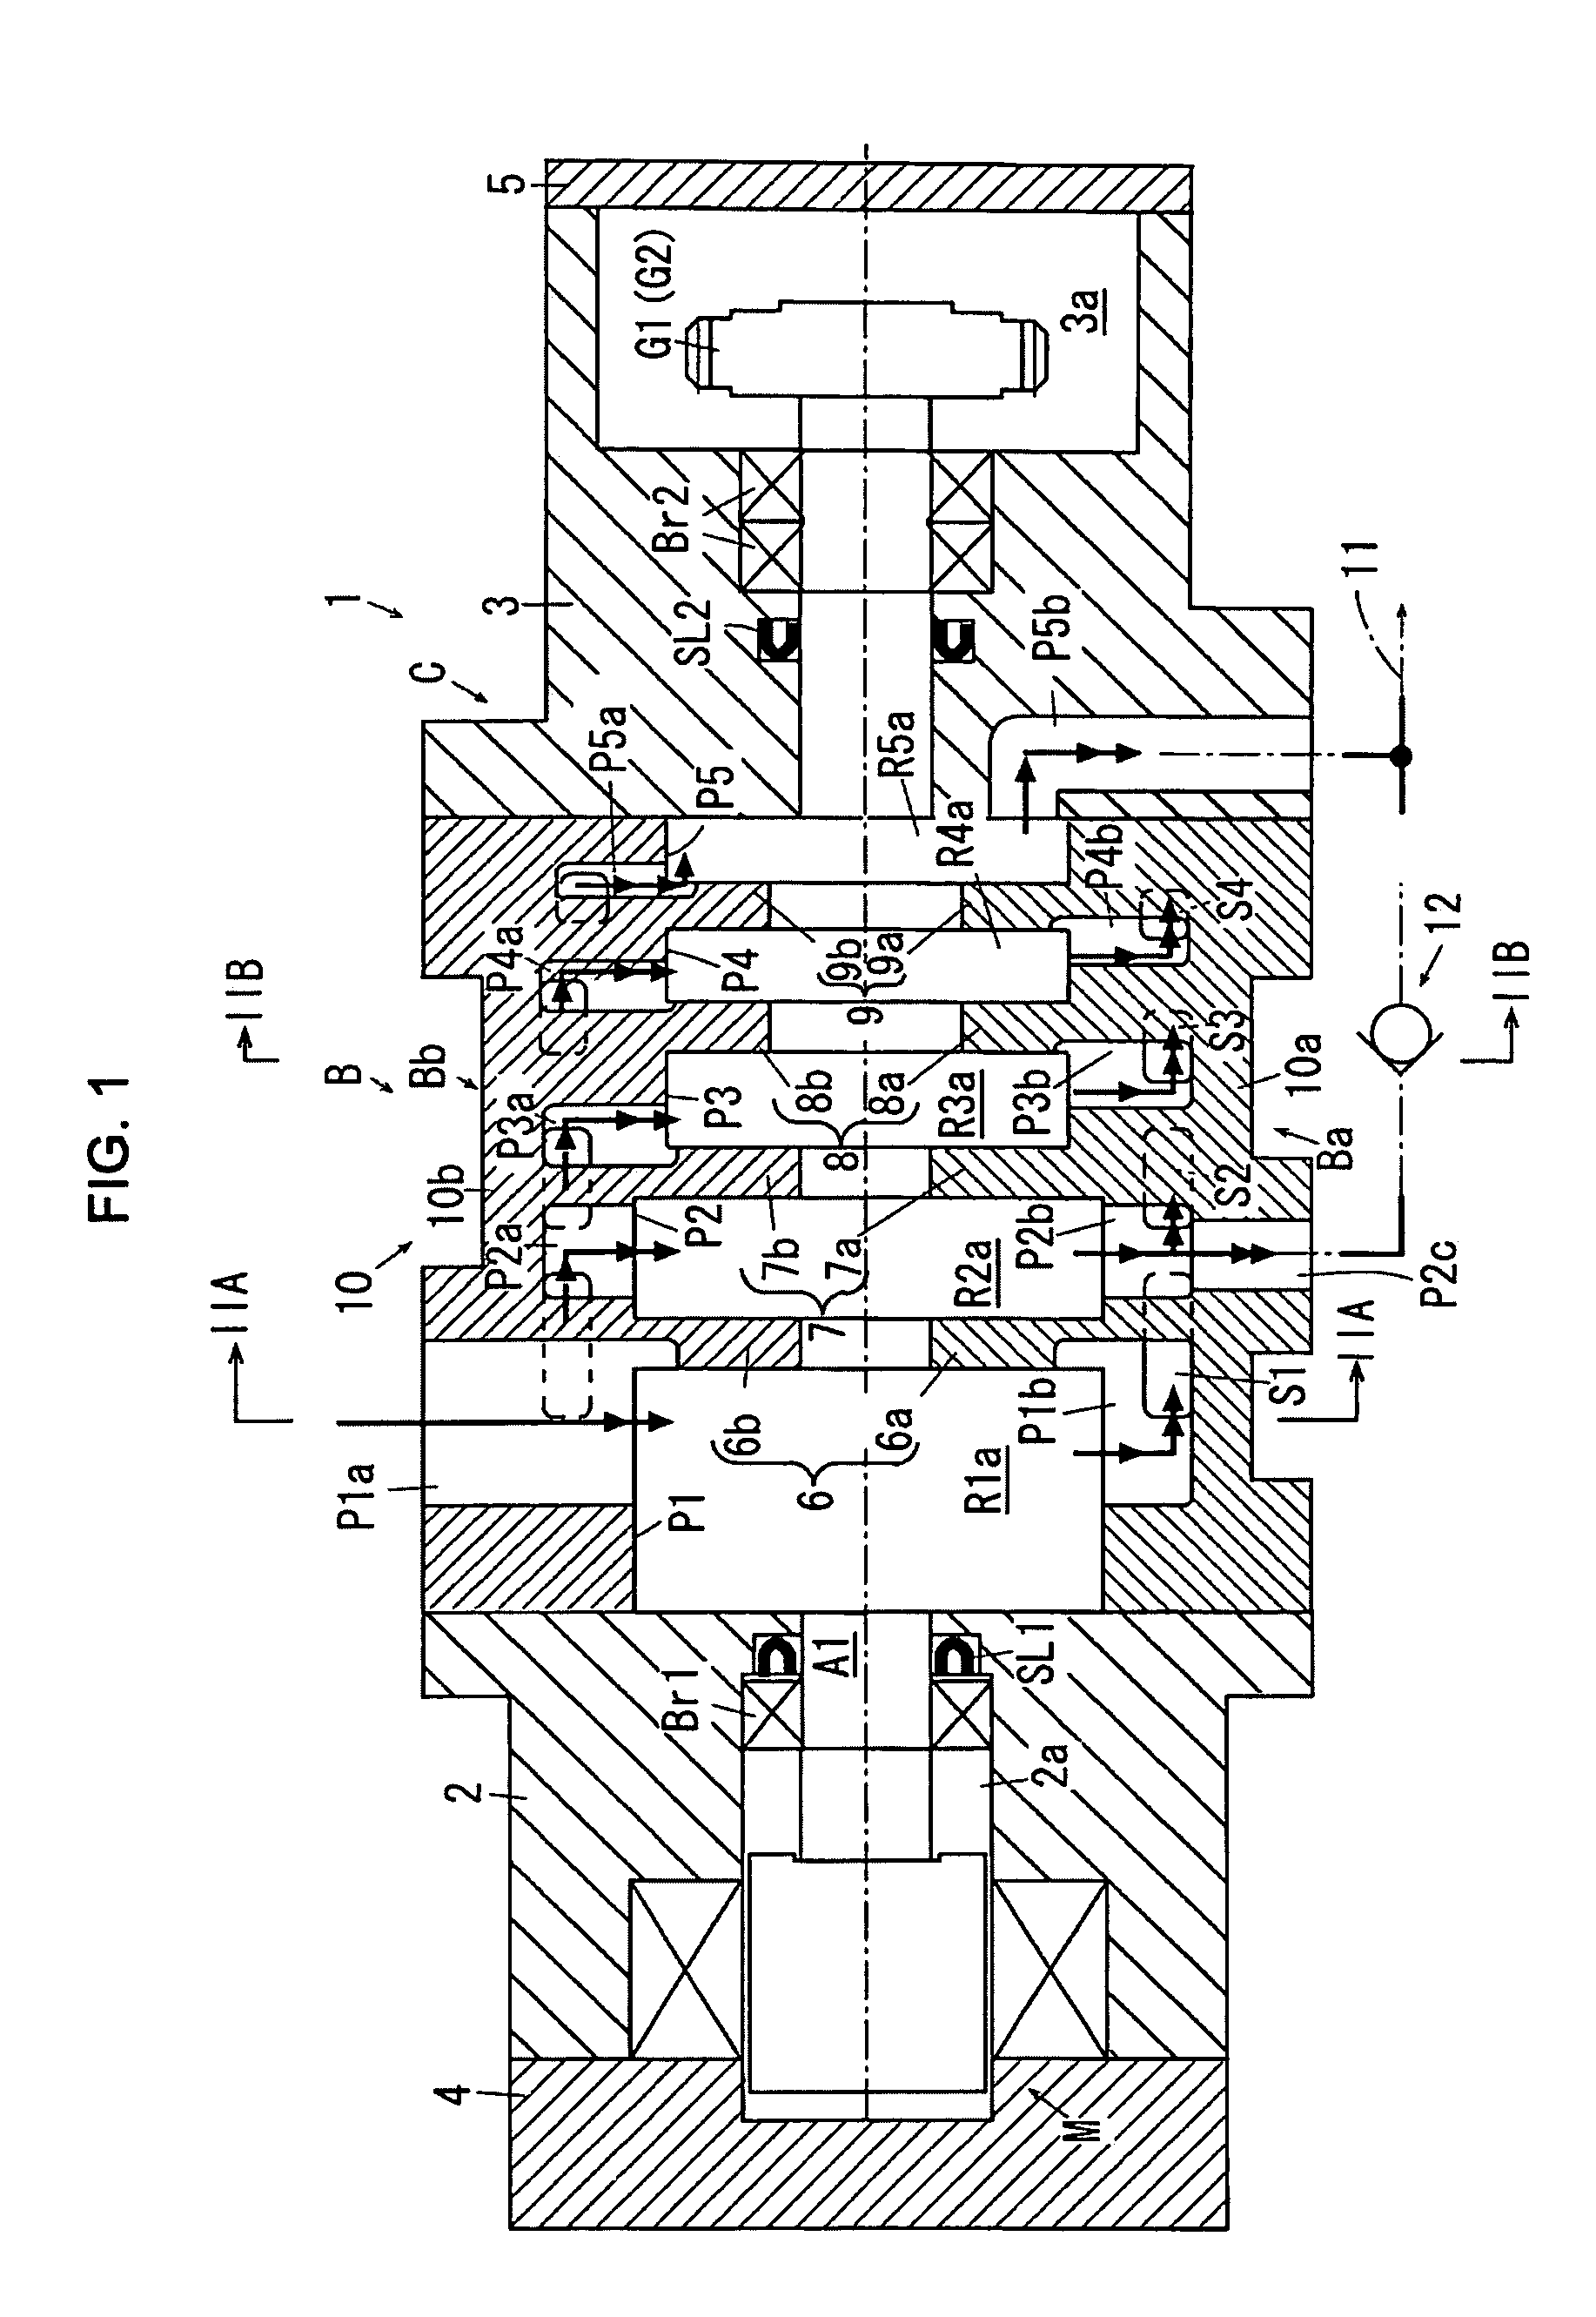 Multistage roots-type vacuum pump